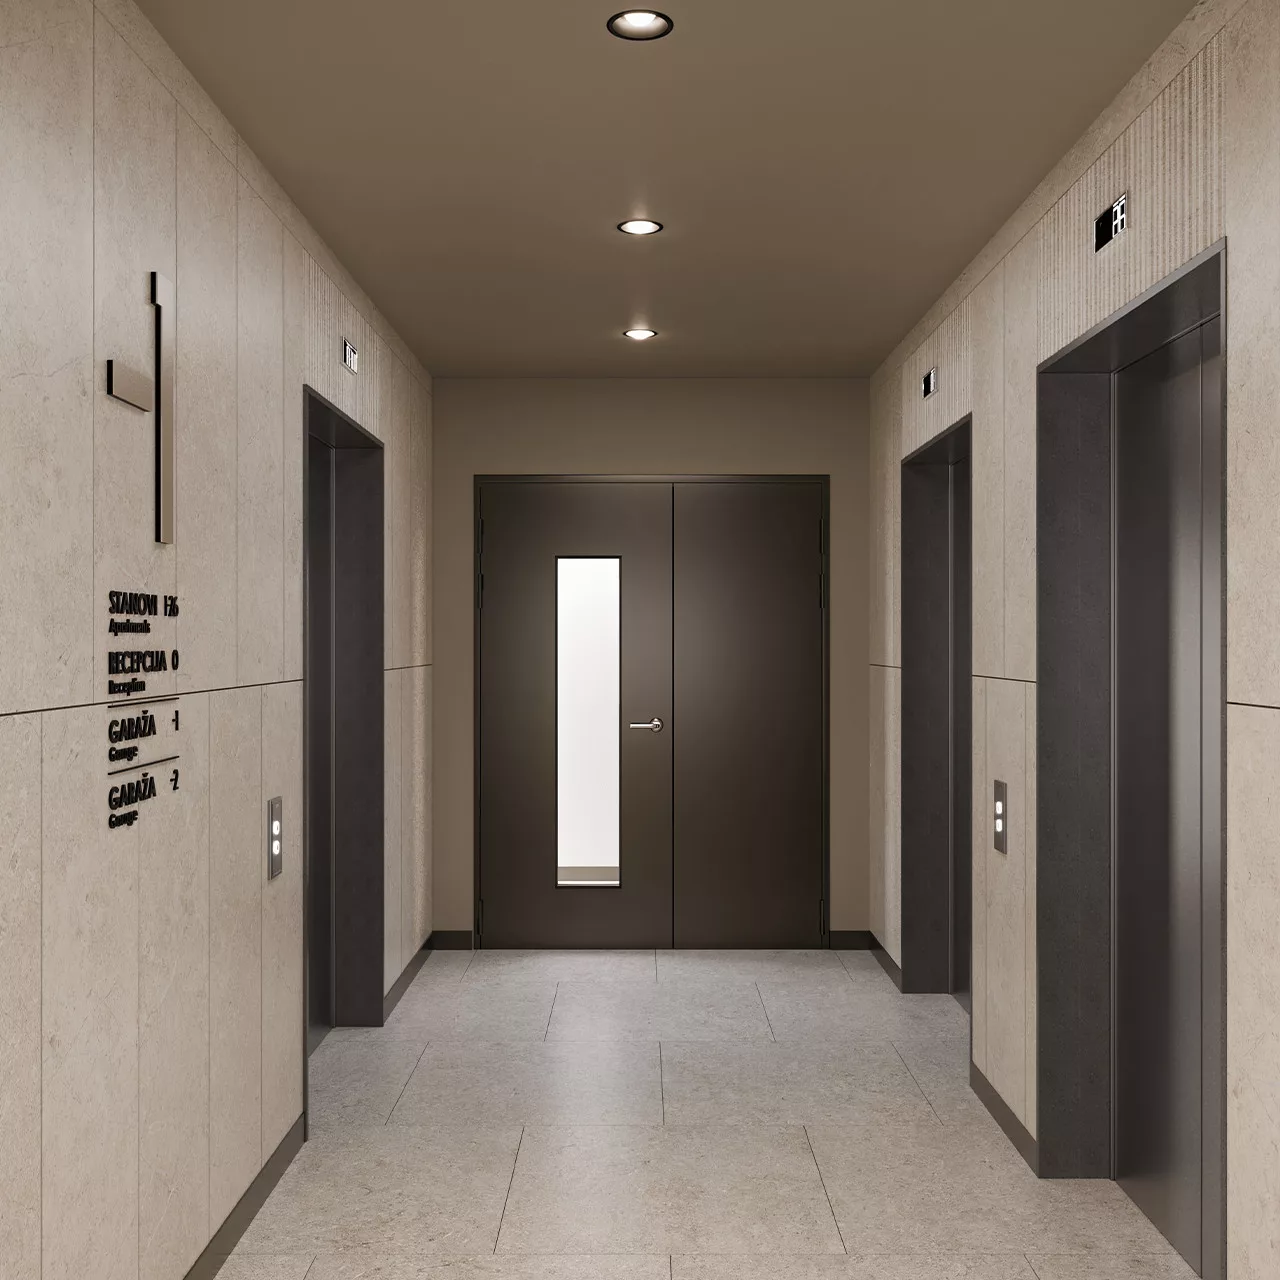 Corridor with elevators in the BW Rima building